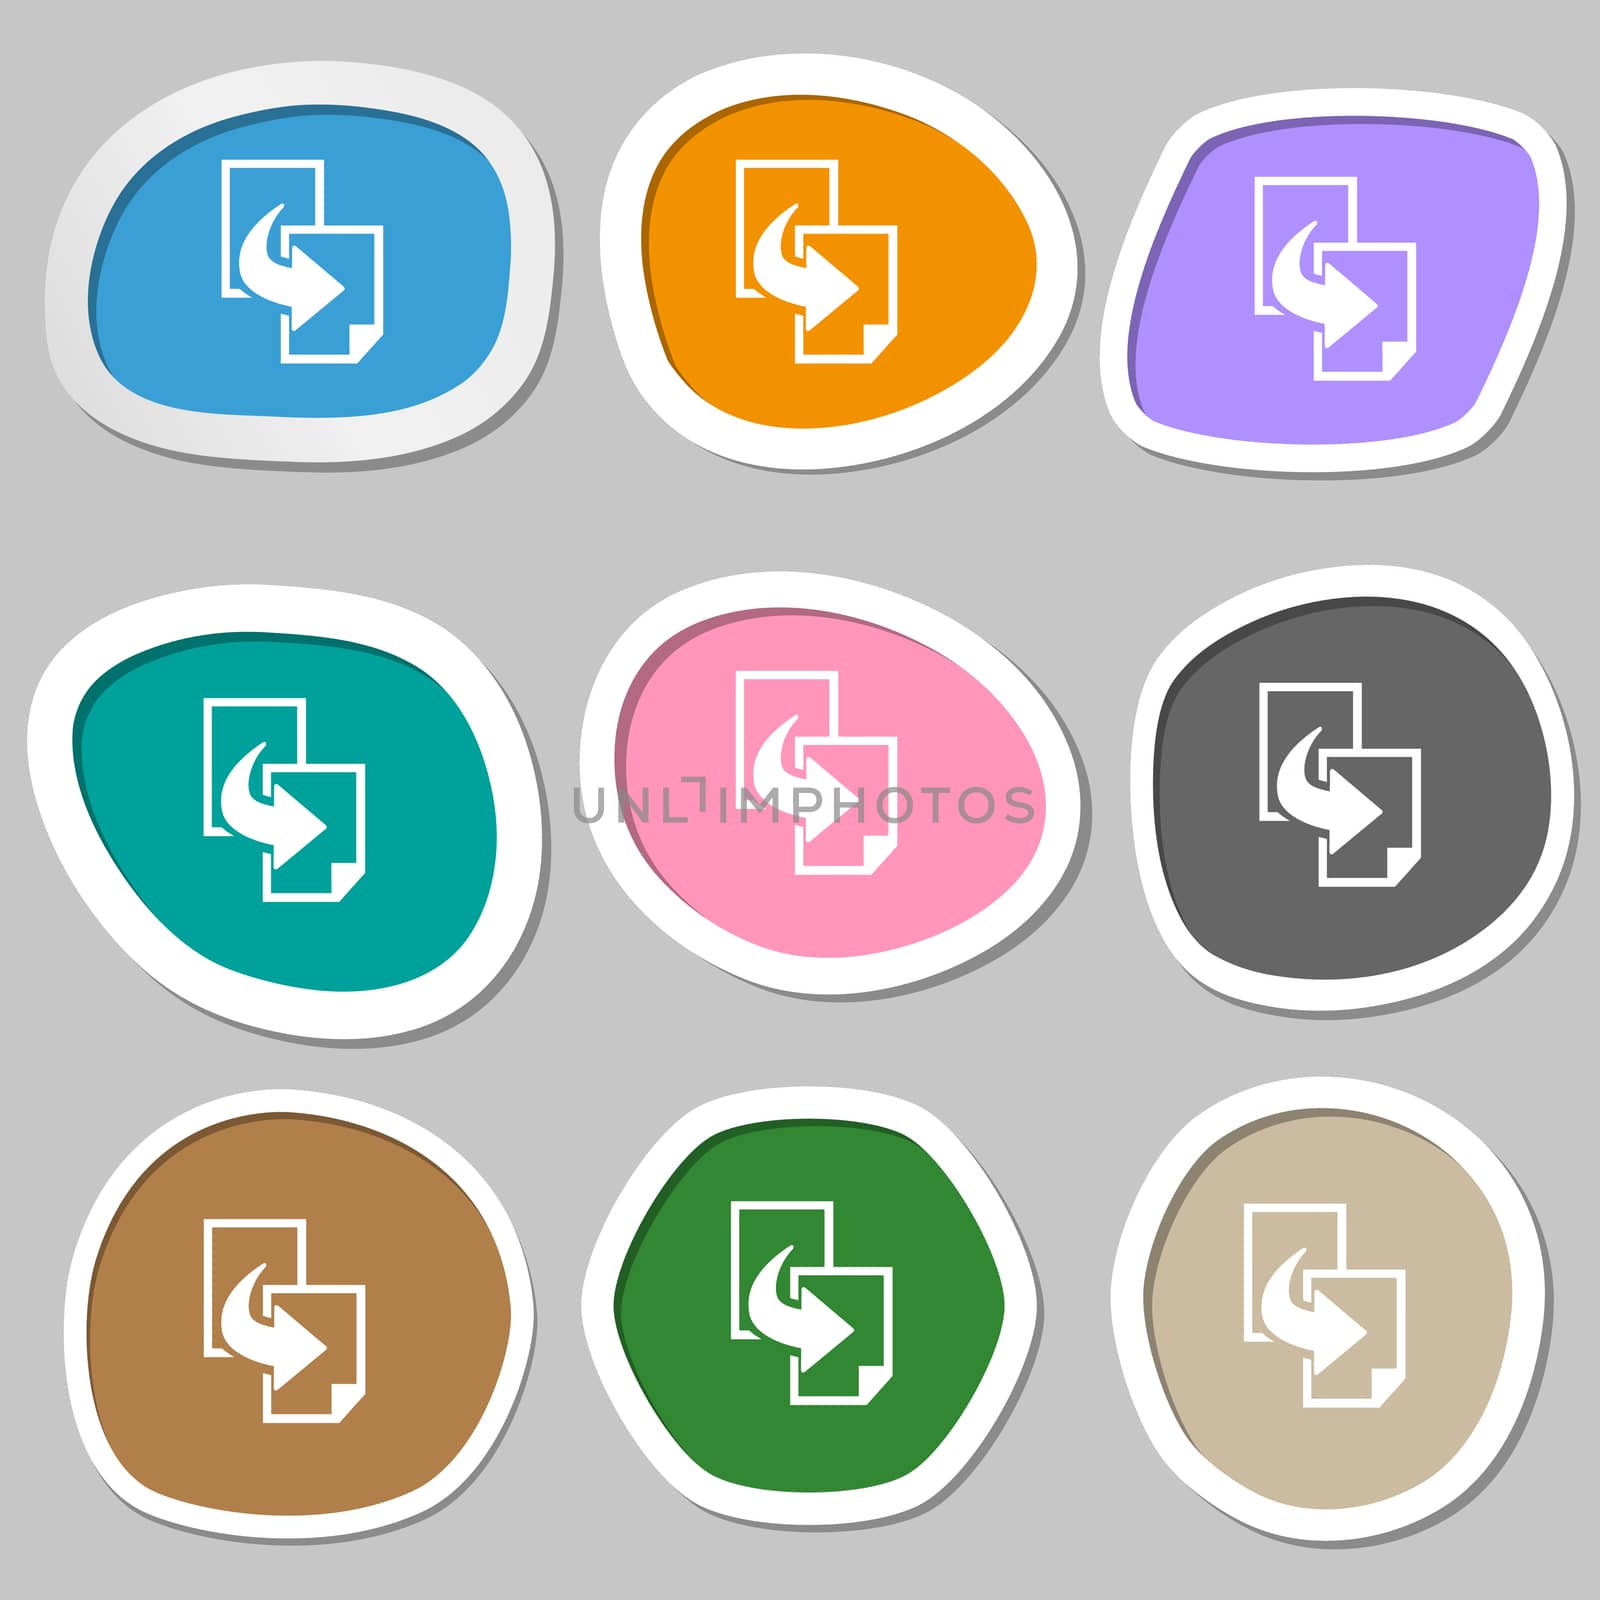 Copy file sign icon. Duplicate document symbol. Multicolored paper stickers. illustration